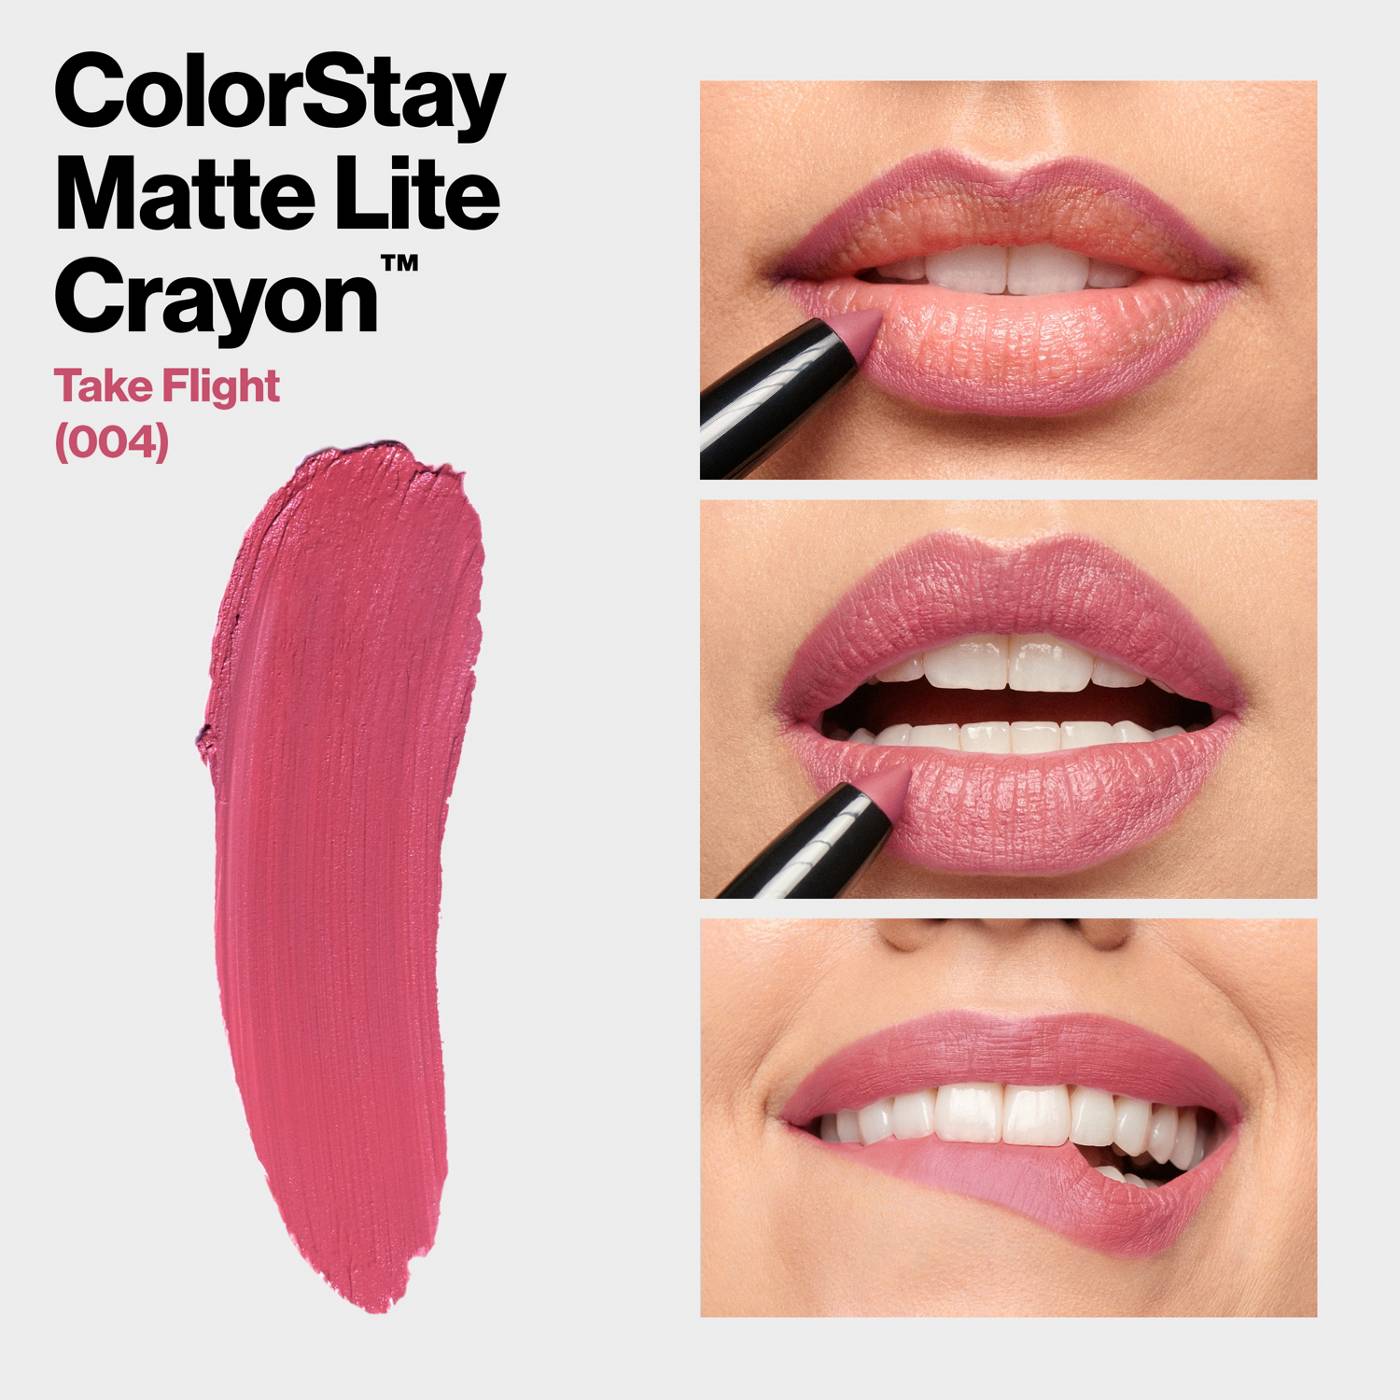 Revlon ColorStay Matte Lite Crayon Lipstick - Take Flight; image 3 of 7